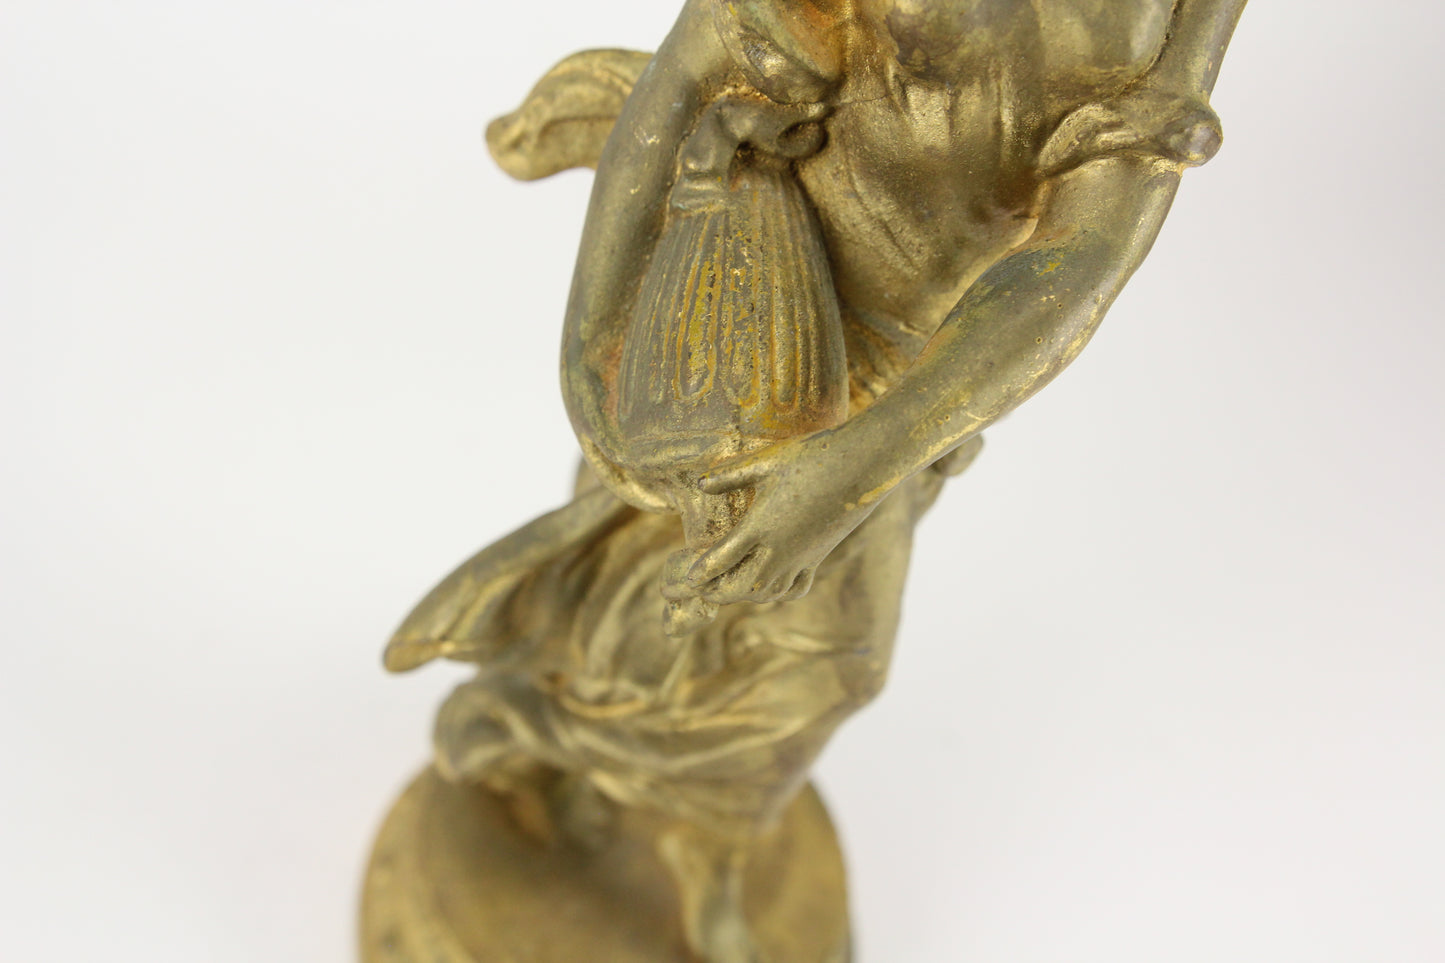 Antique Gold-Toned Pot Metal Clock Topper Statue of Goddess with an Ewer